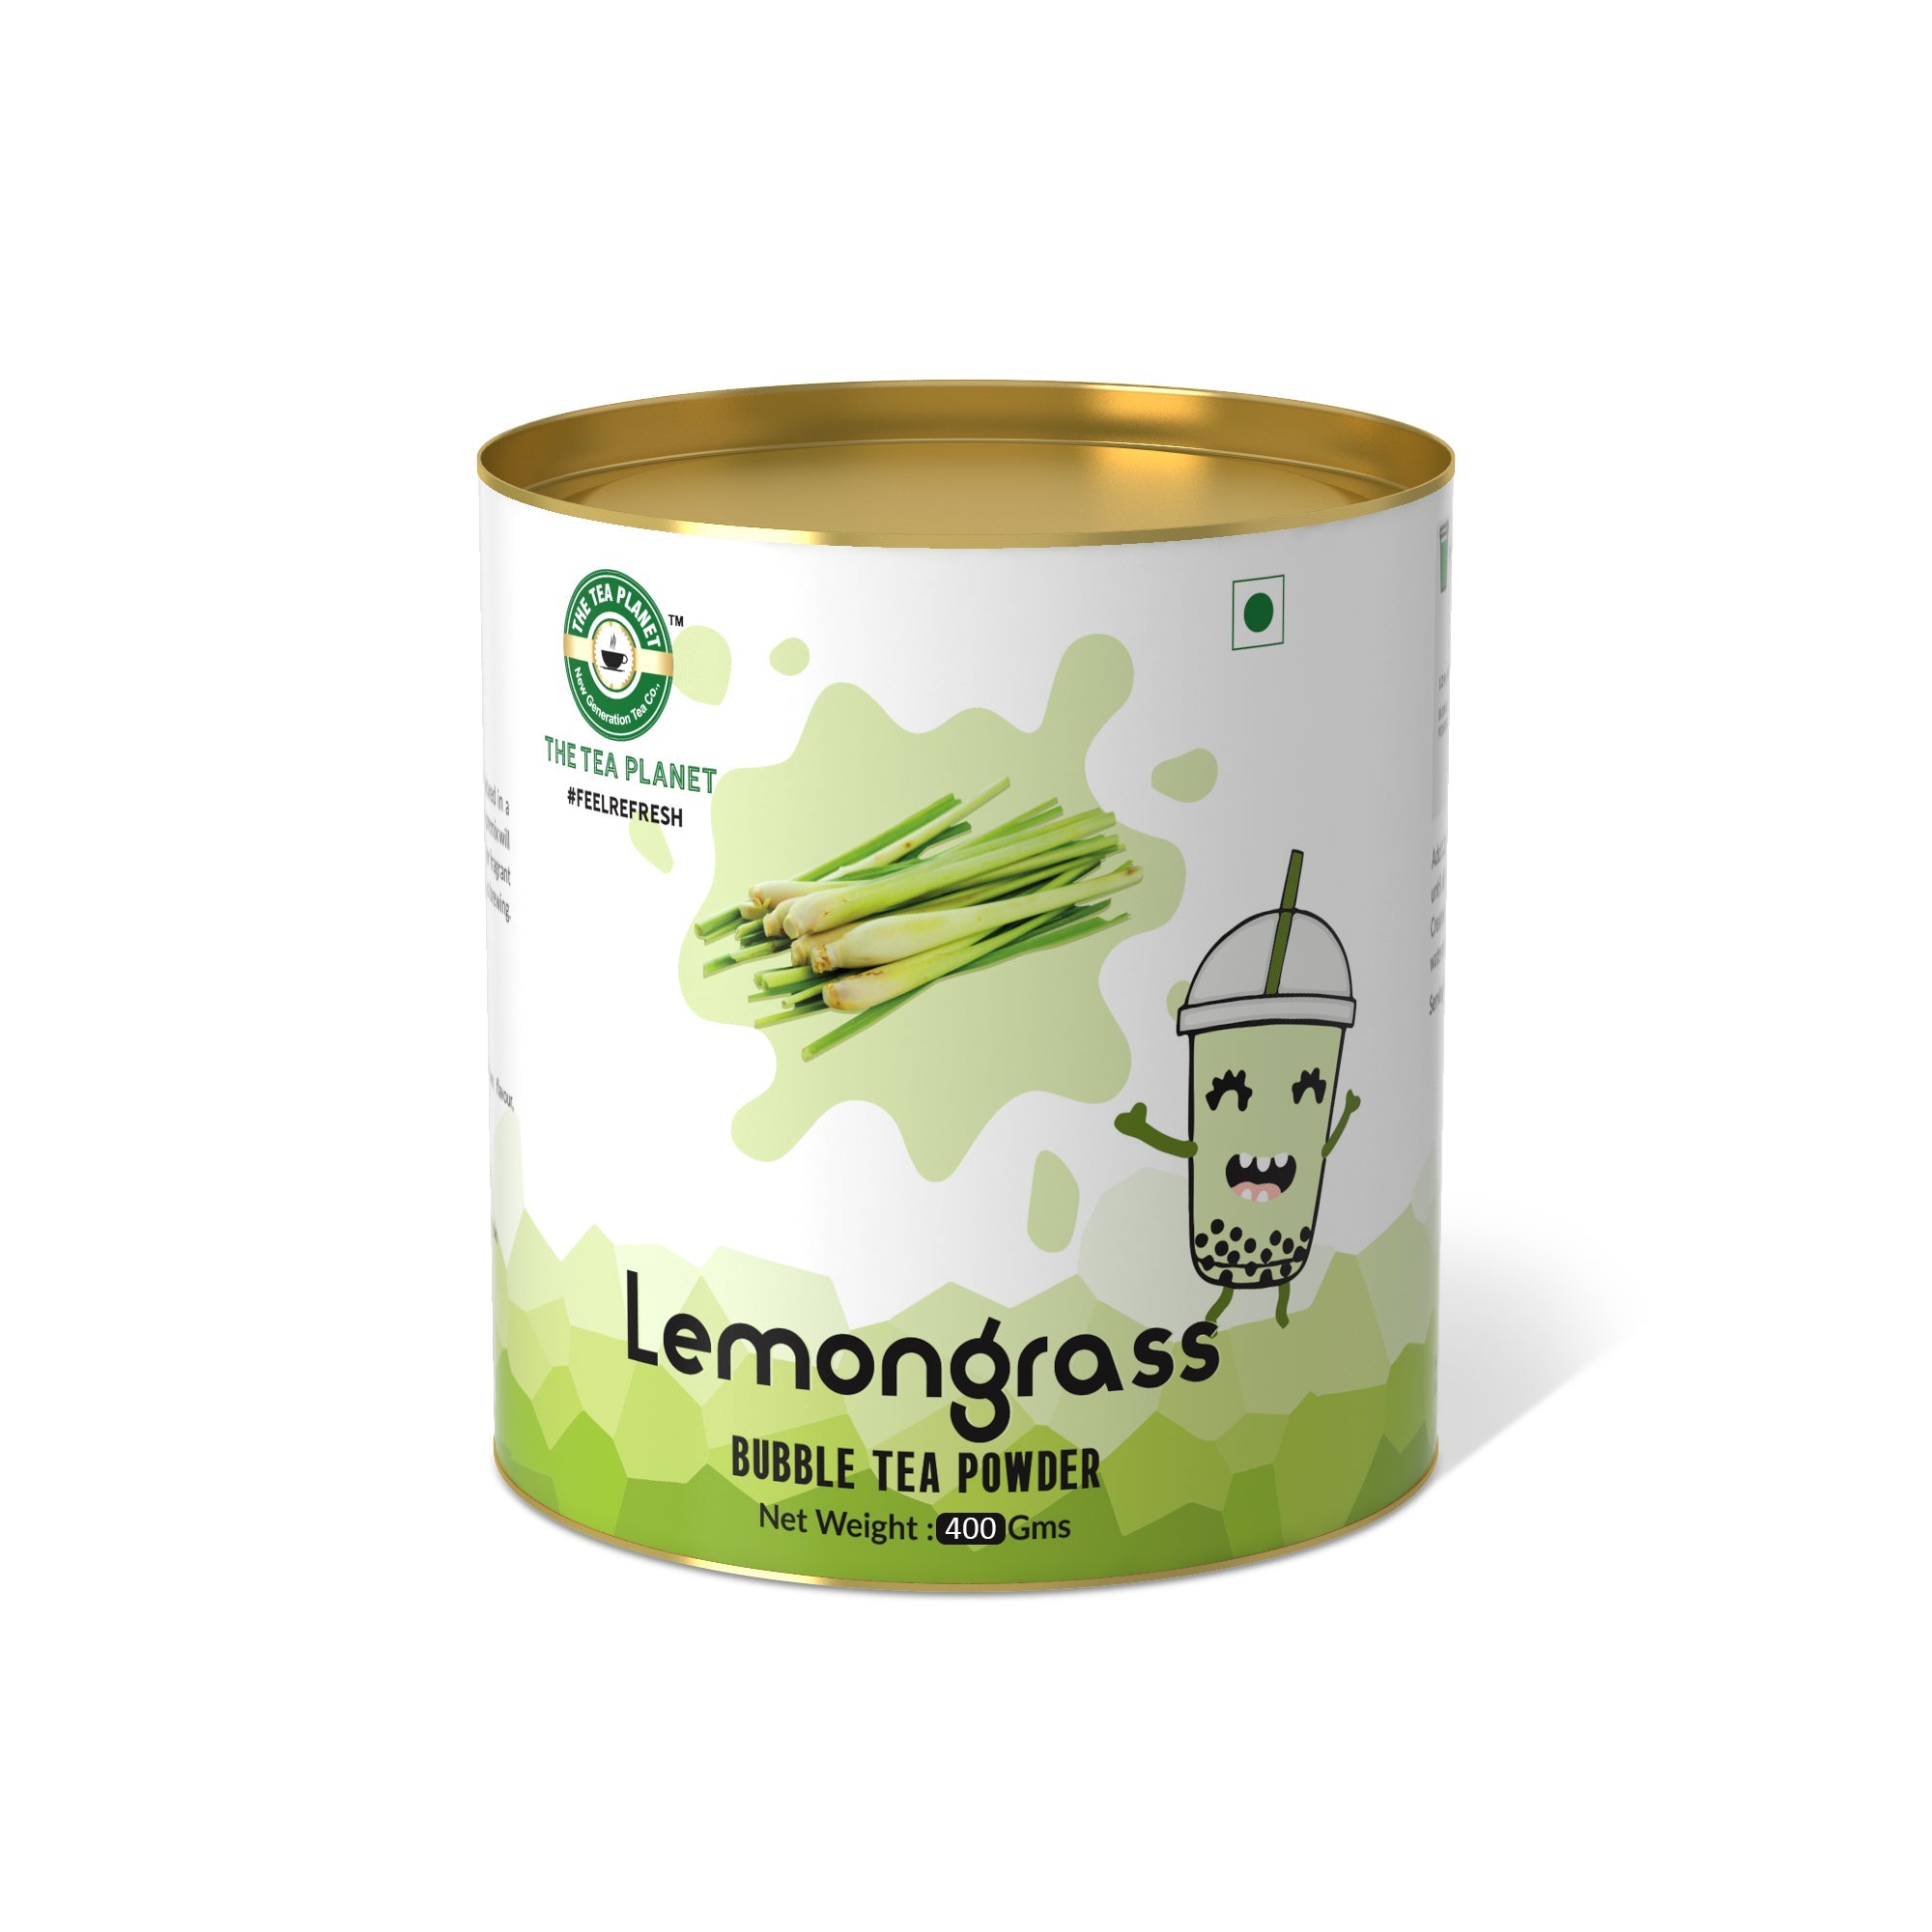 Lemongrass Bubble Tea Premix - 250 gms